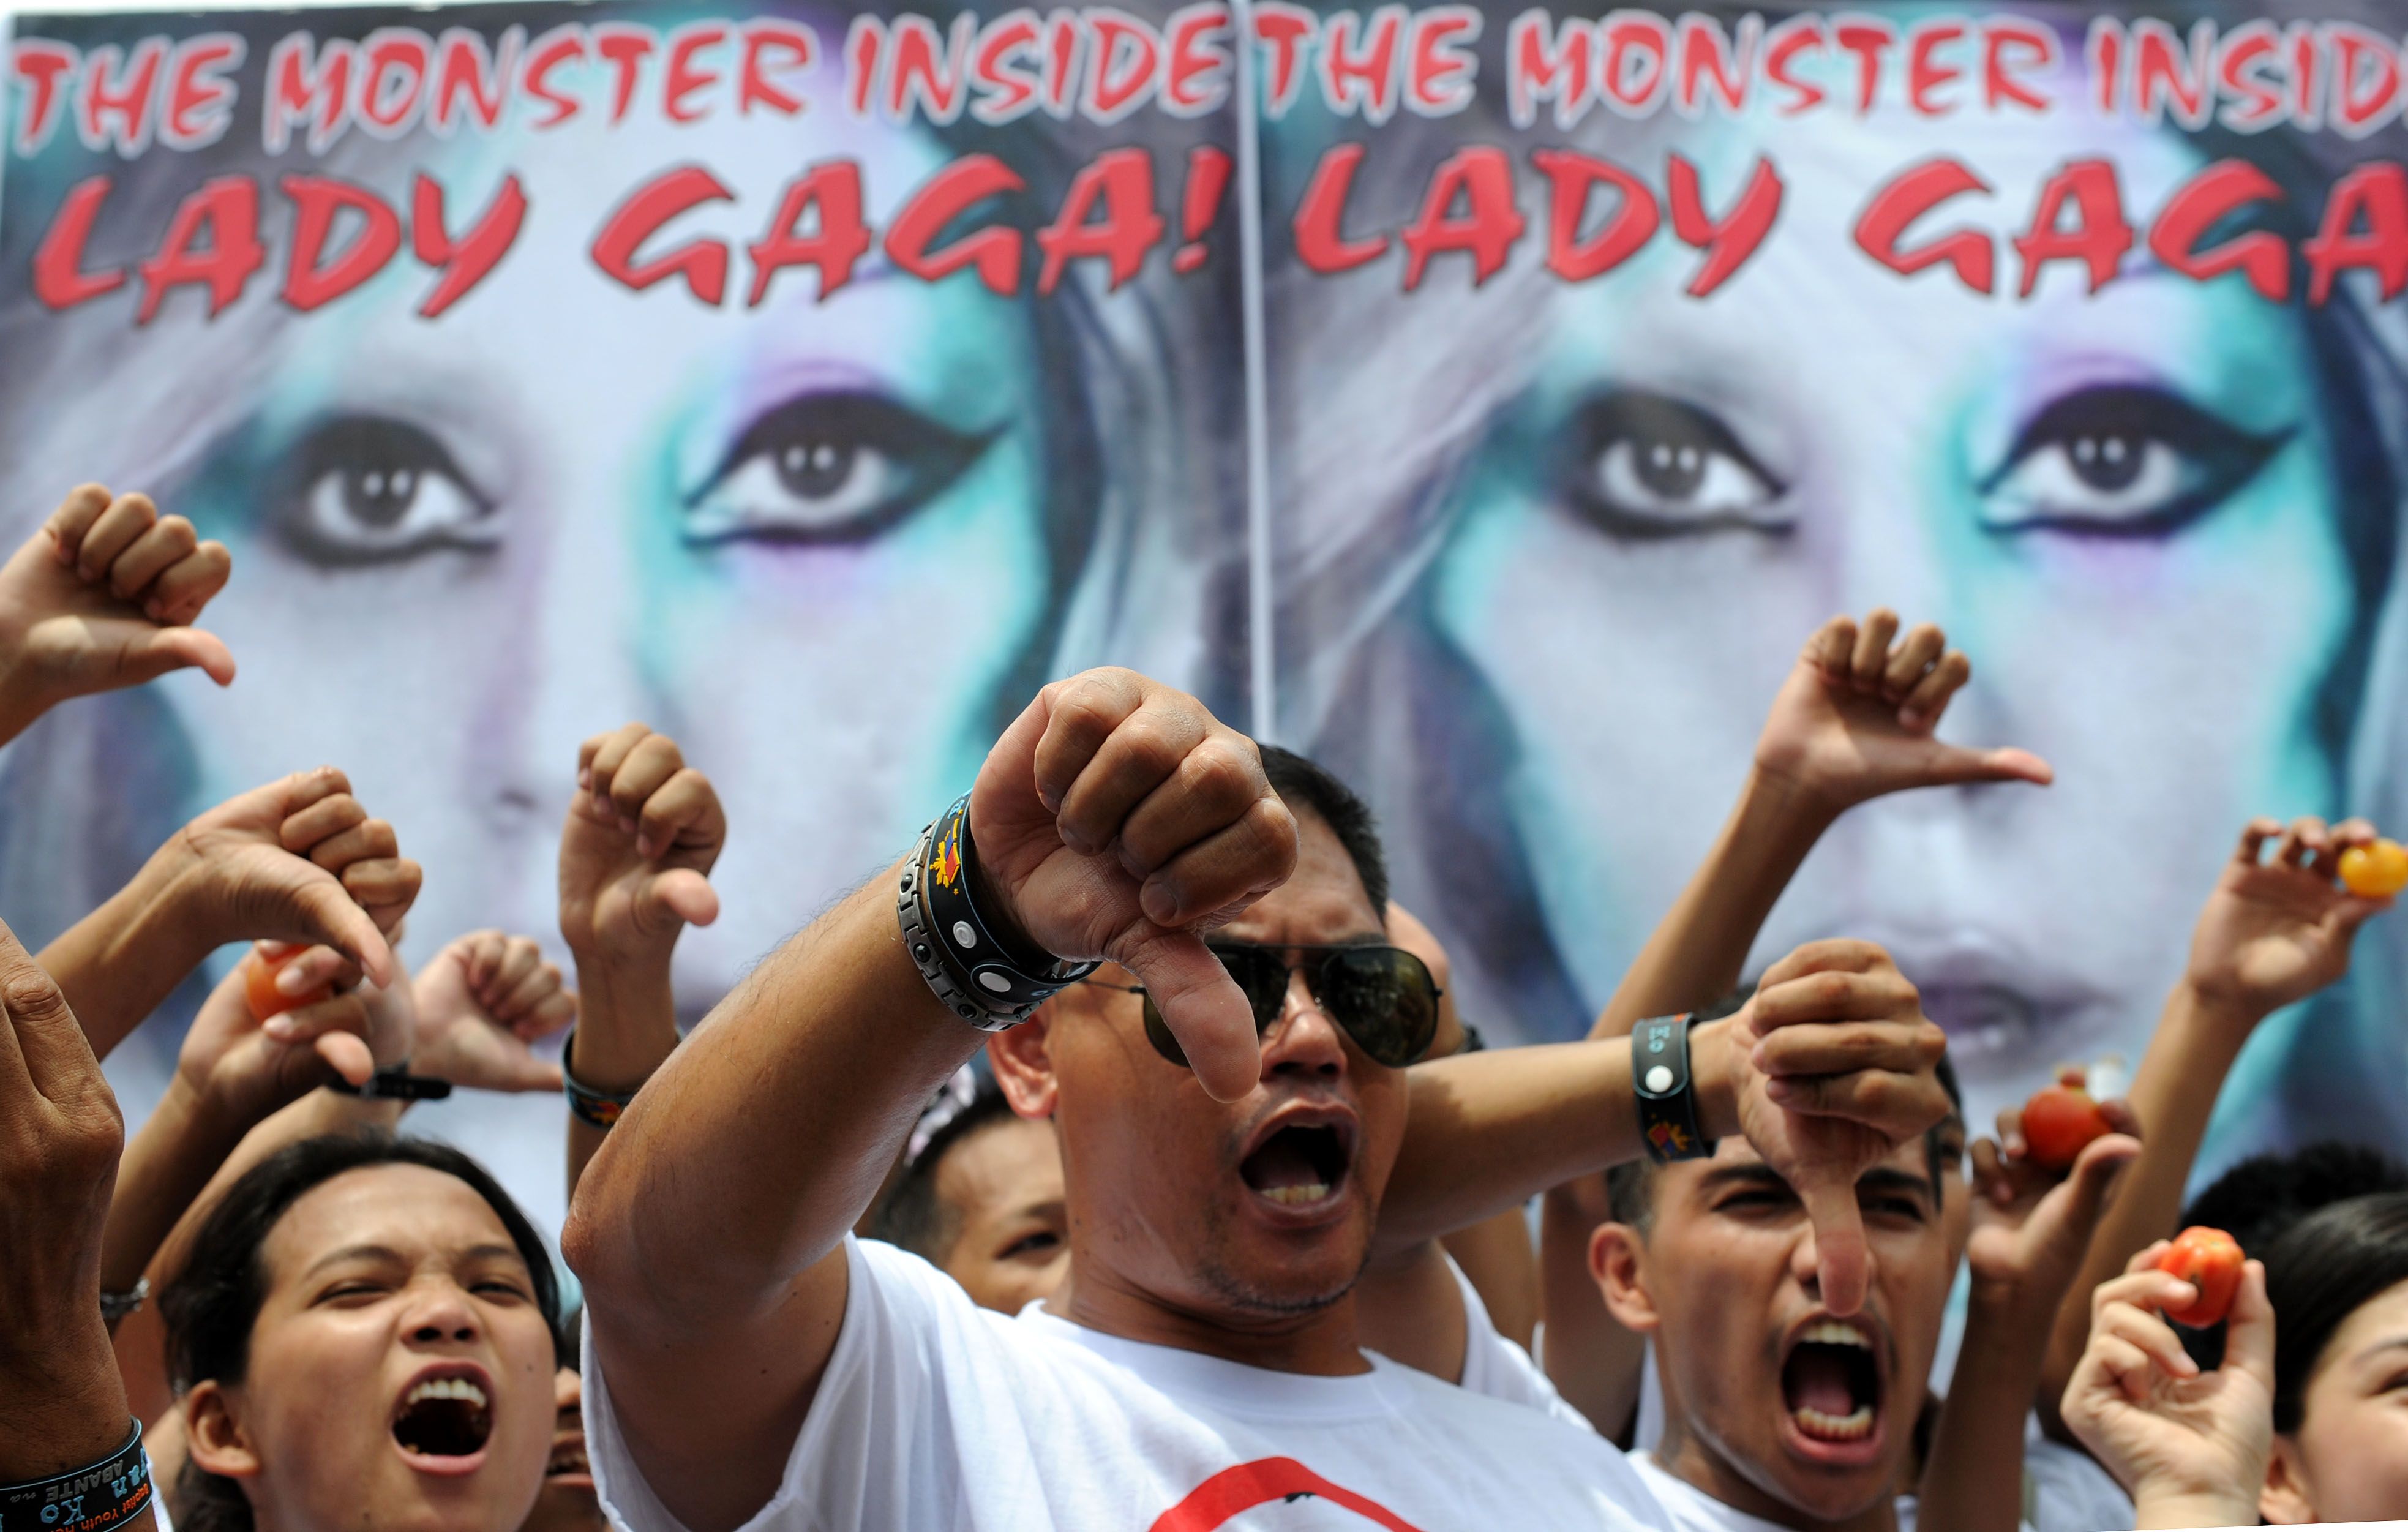 French Protests Nix Lady Gaga Shows